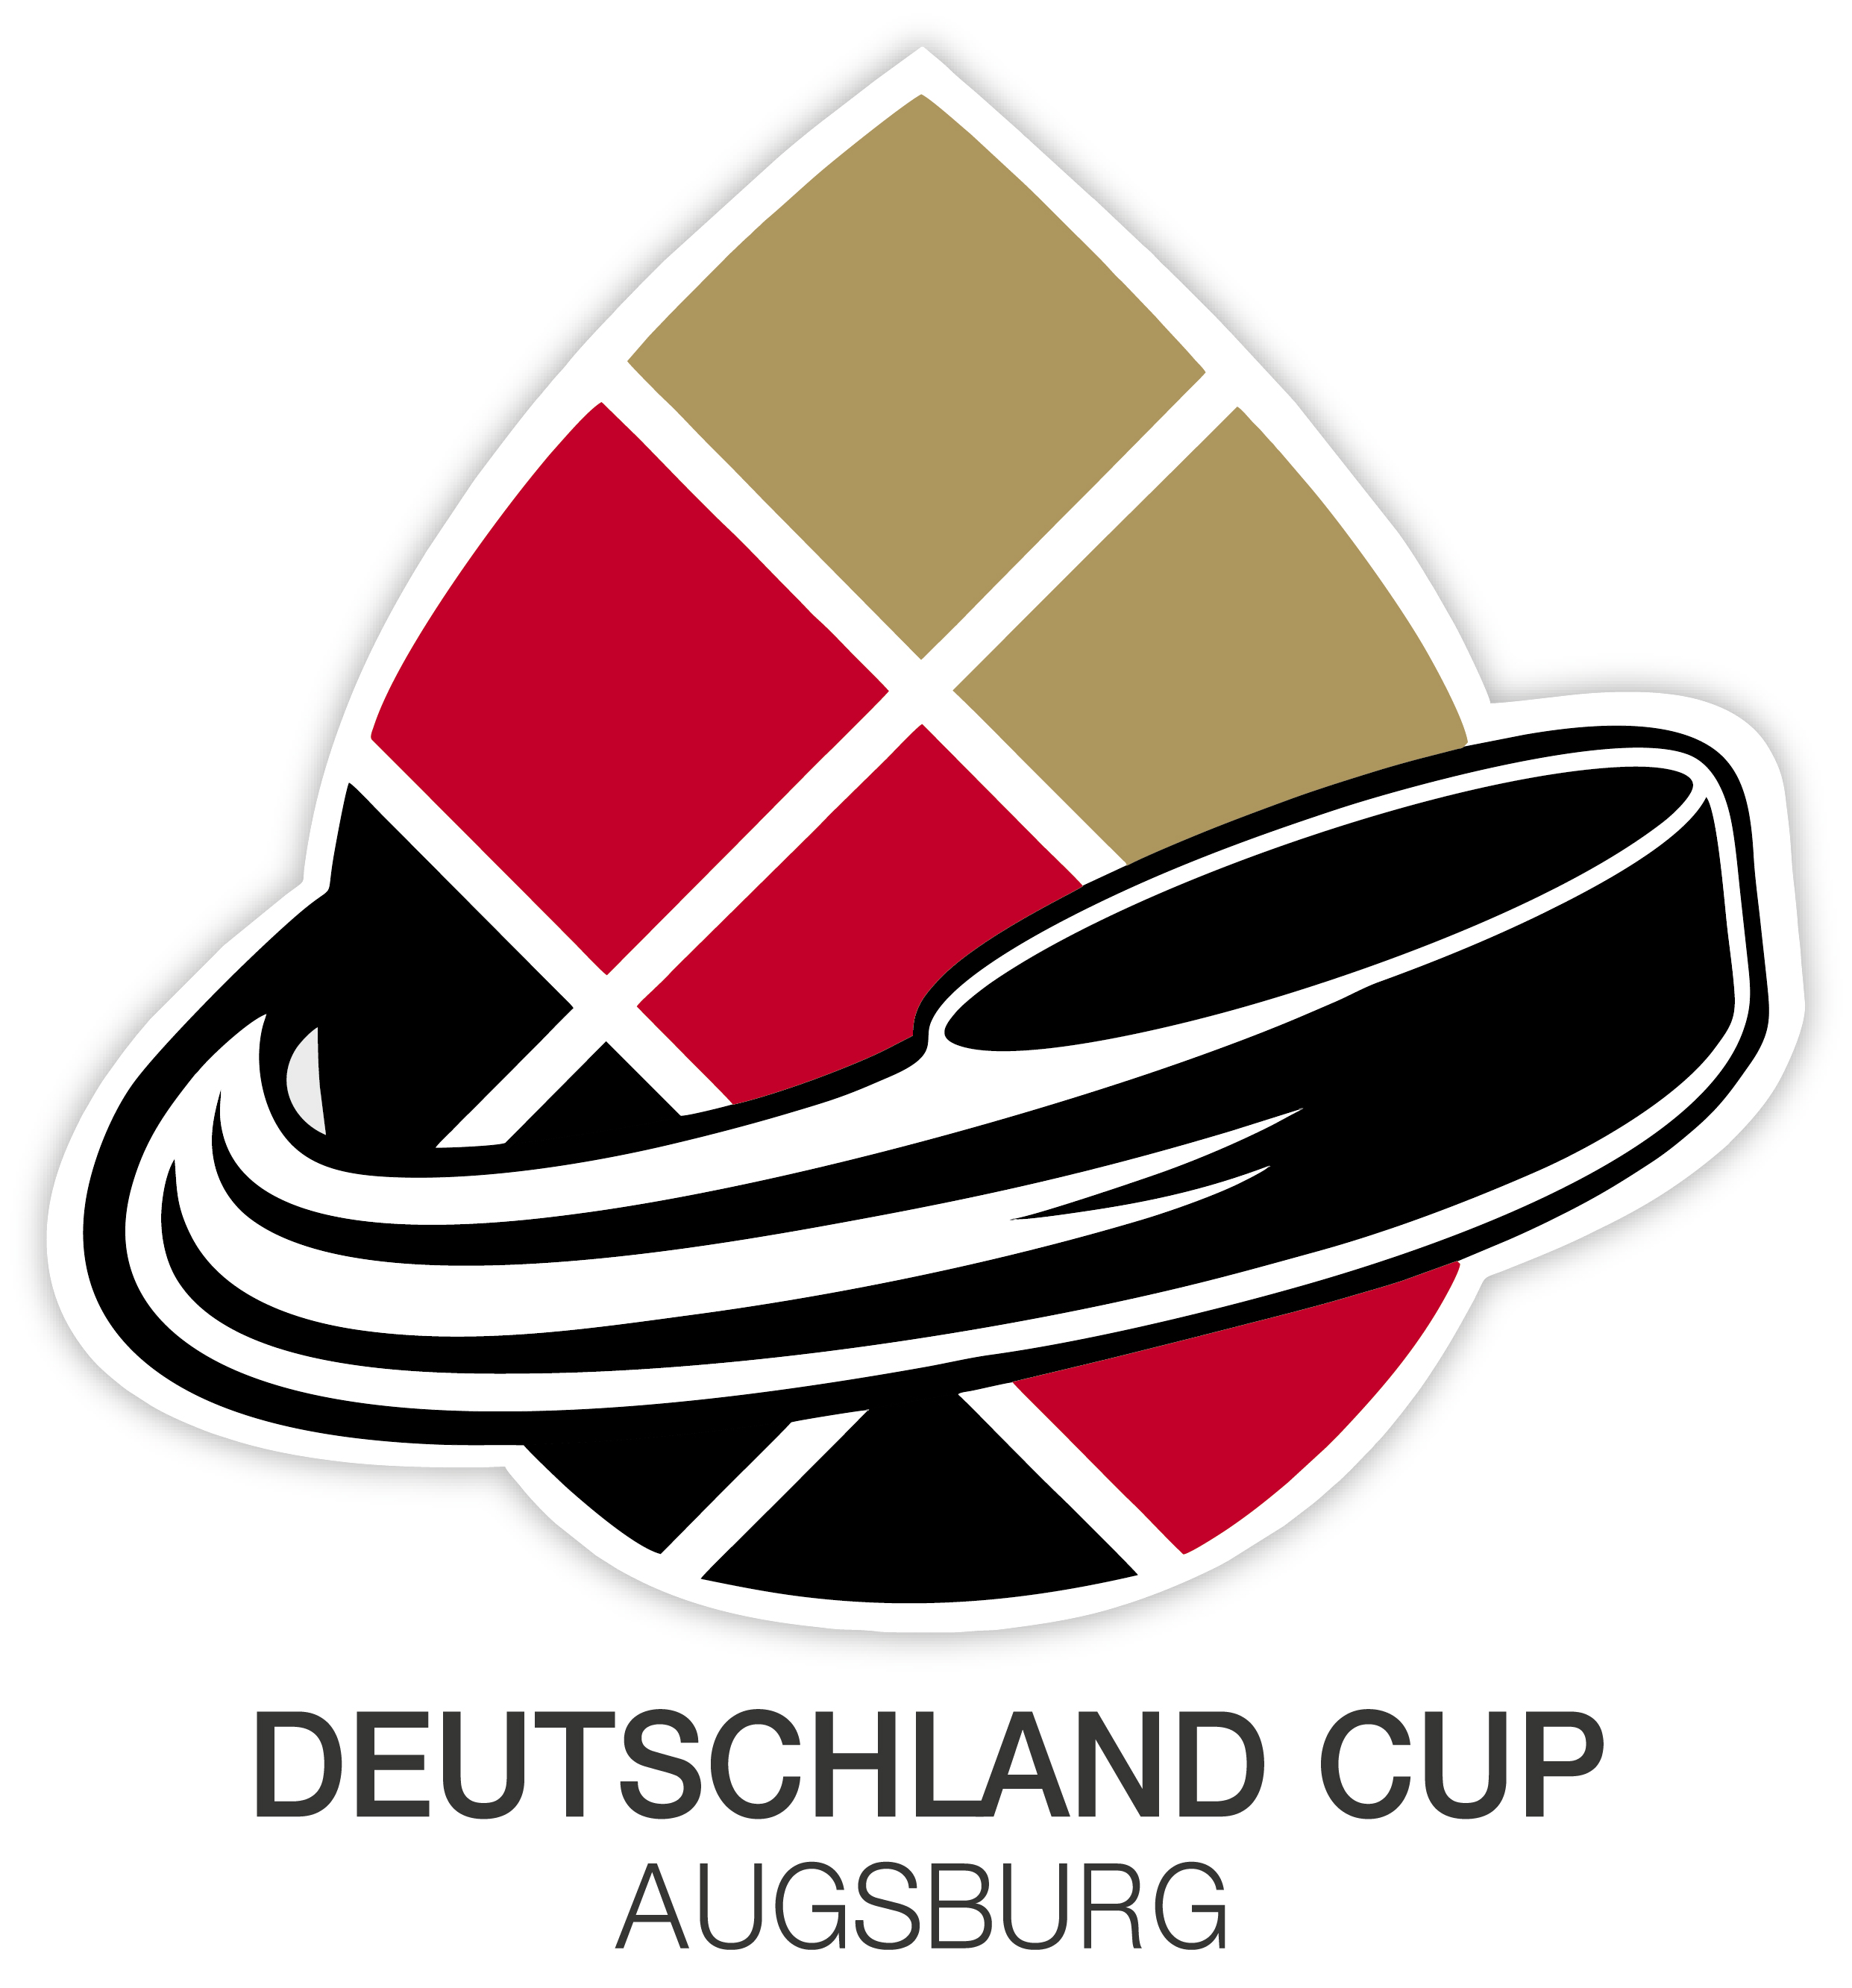 deutschlandcup logo 2016